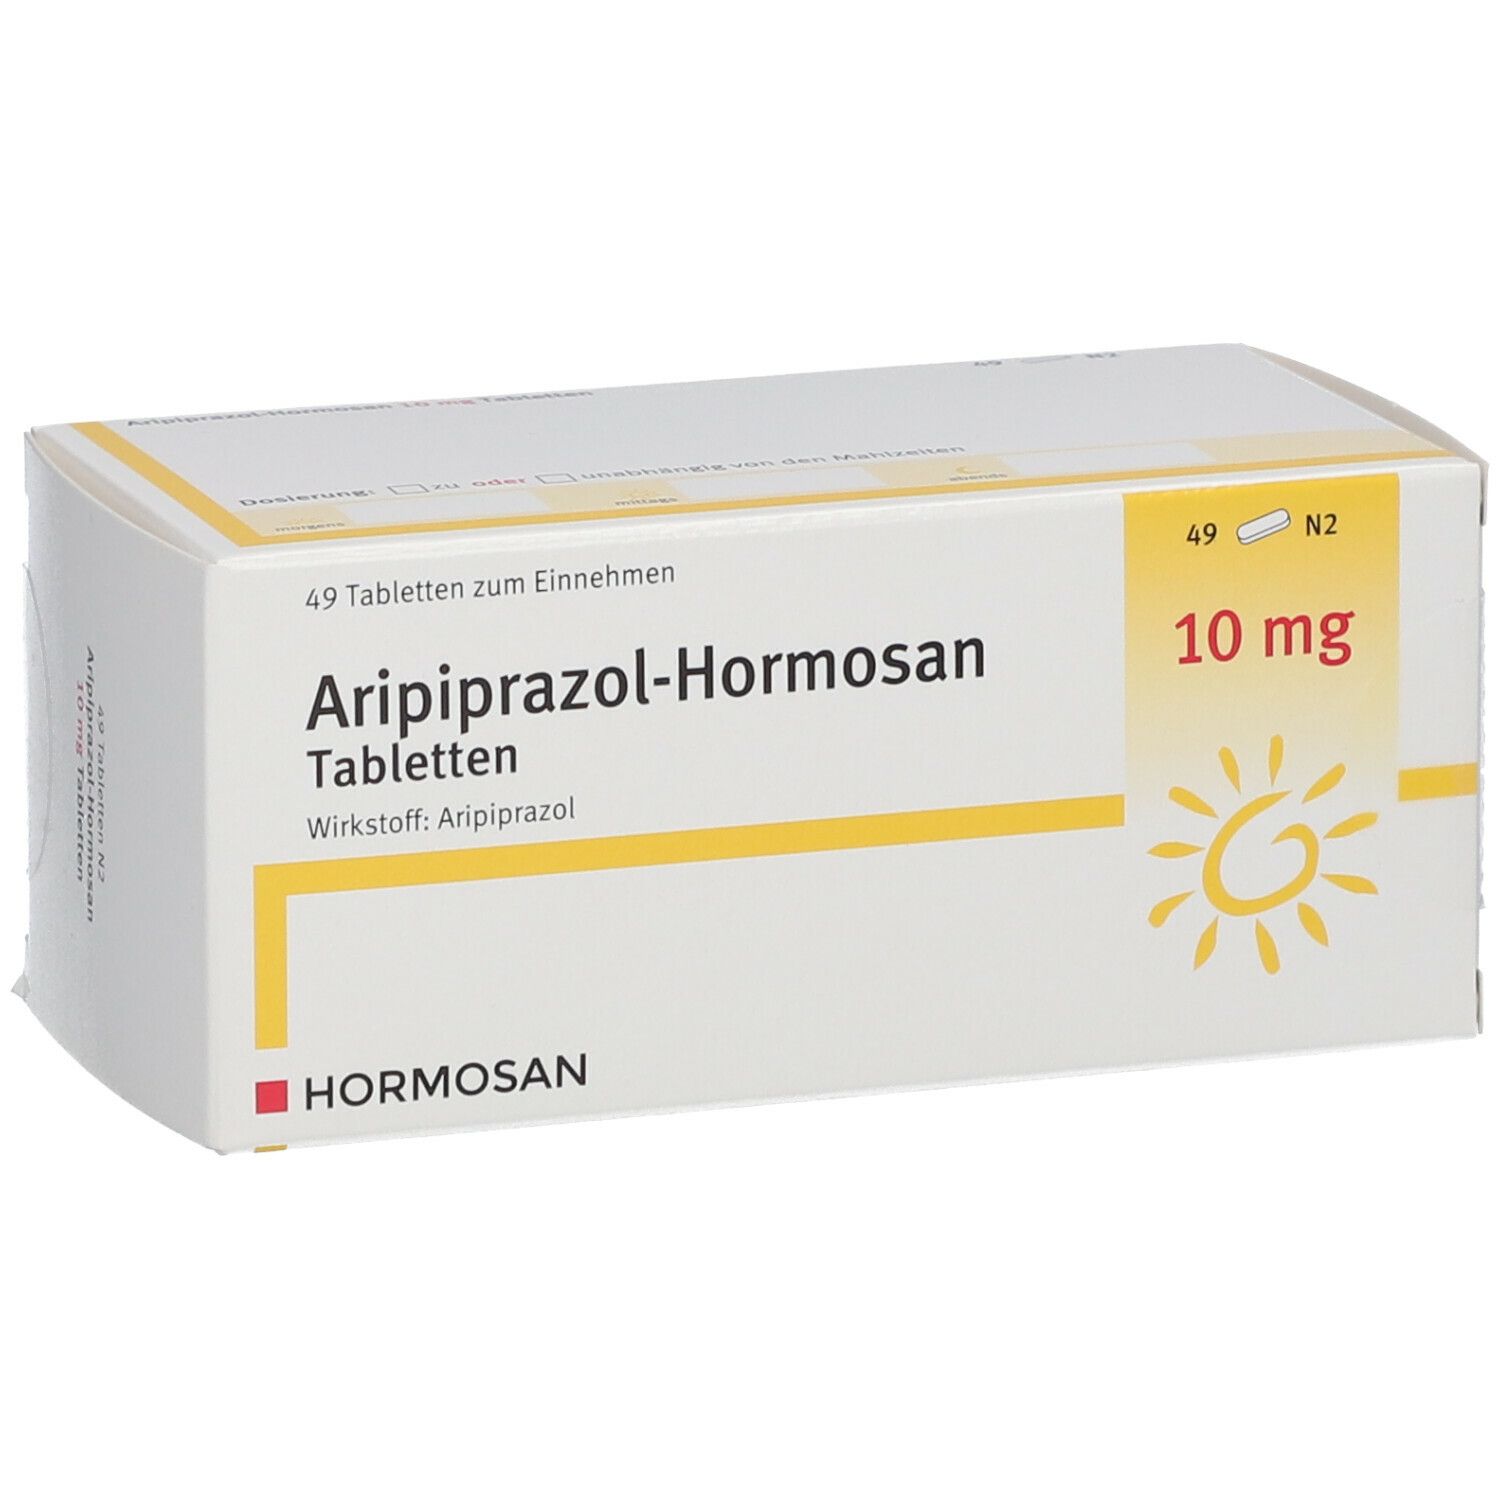 Aripiprazol-Hormosan 10 mg